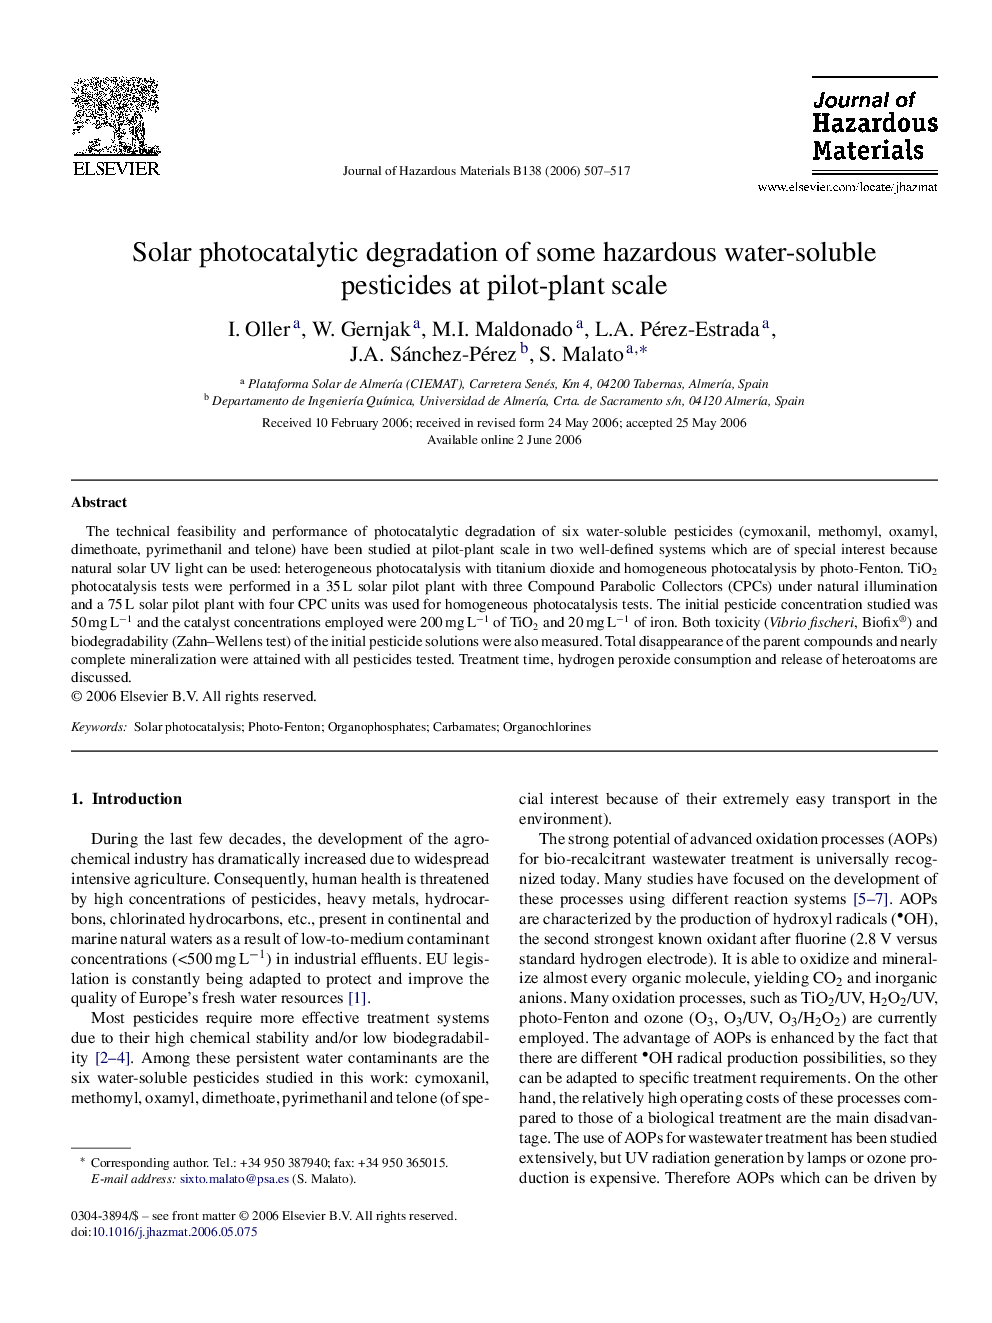 Solar photocatalytic degradation of some hazardous water-soluble pesticides at pilot-plant scale